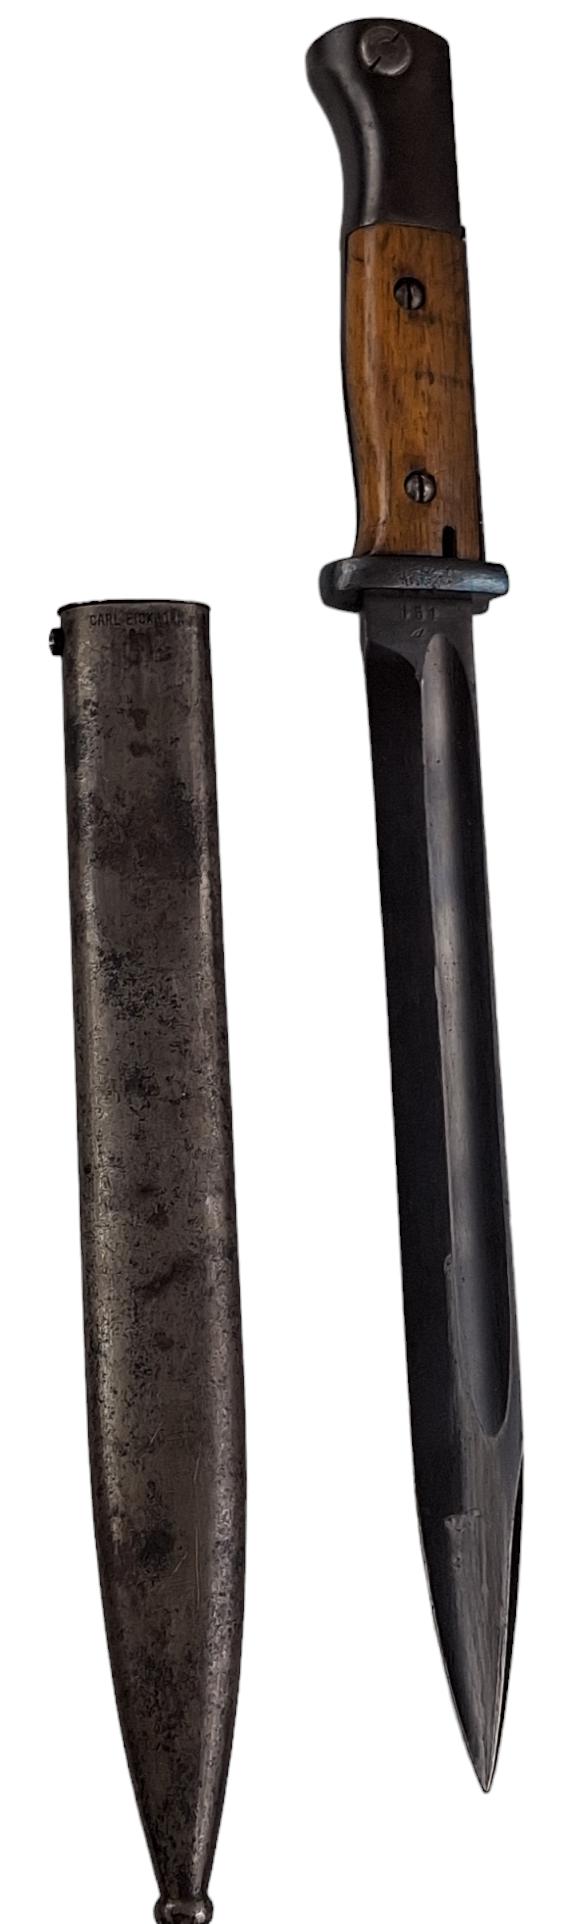 A K98 bajonet with no matching